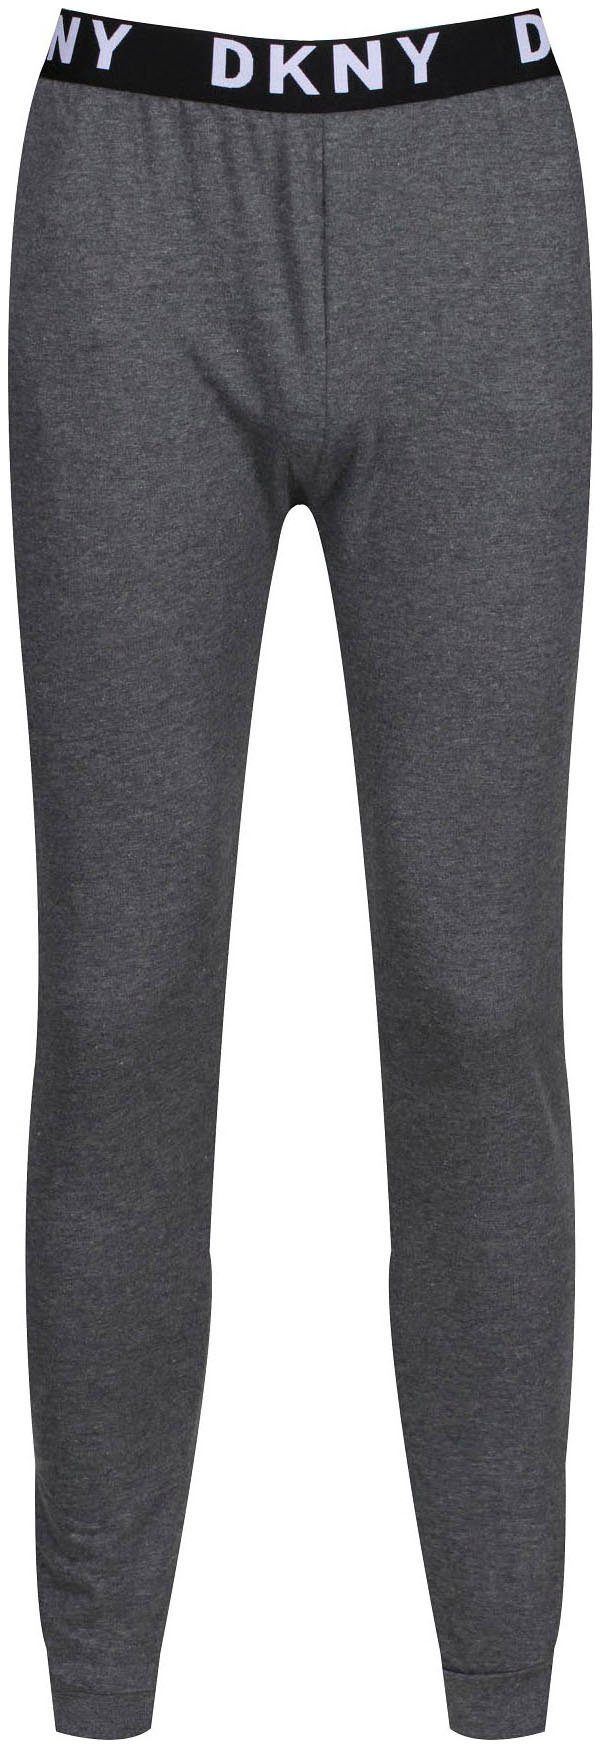 DKNY Loungepants EAGLES grey marl